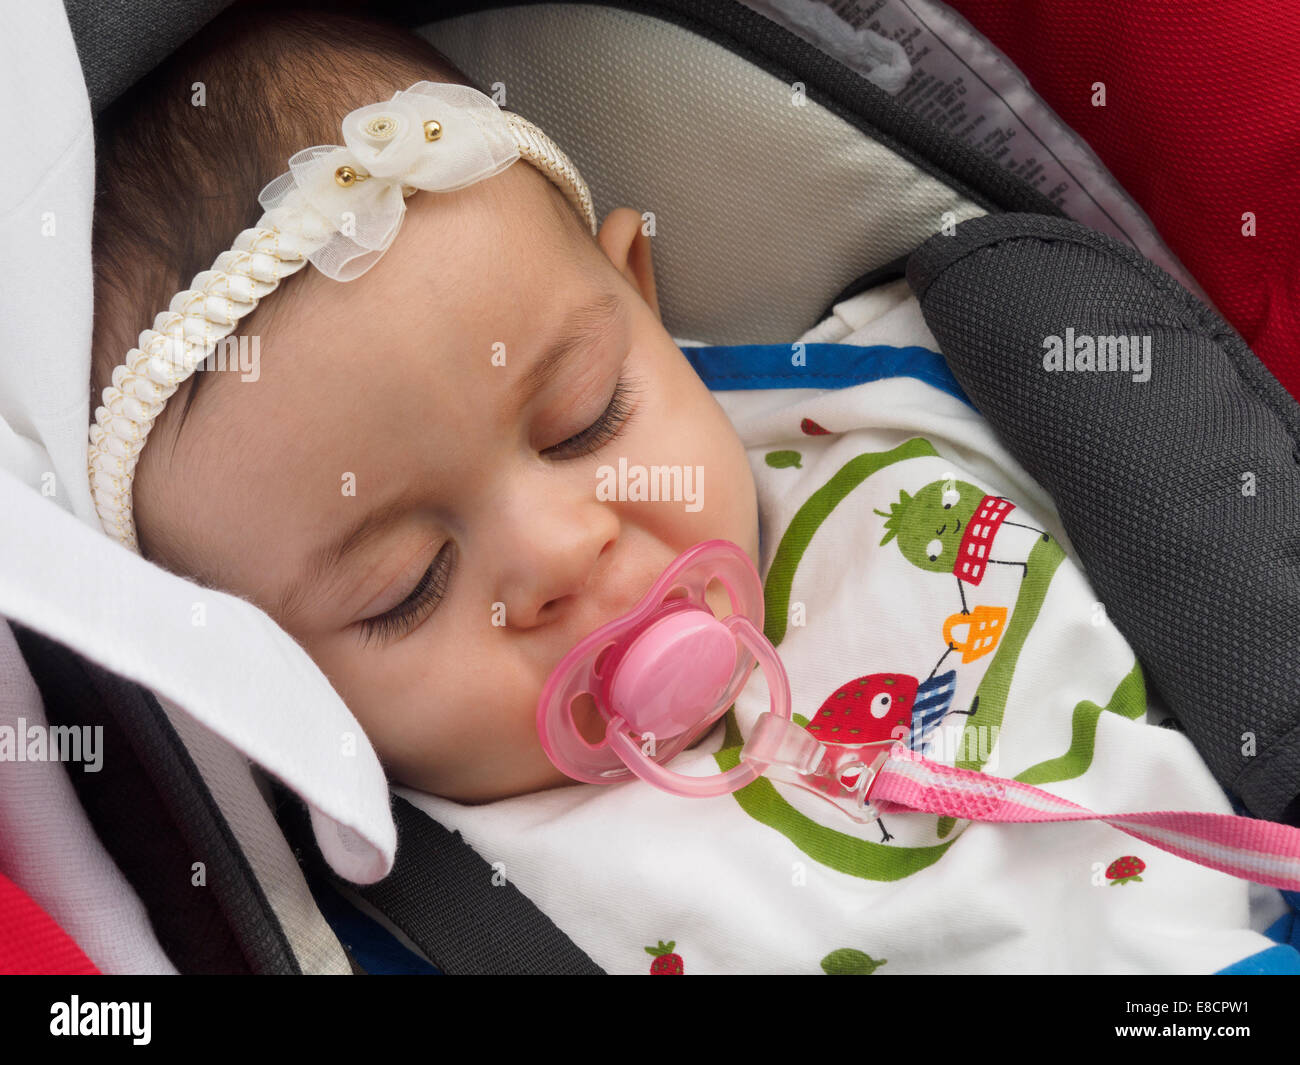 Baby girl sleeping with pacifier Stock Photo